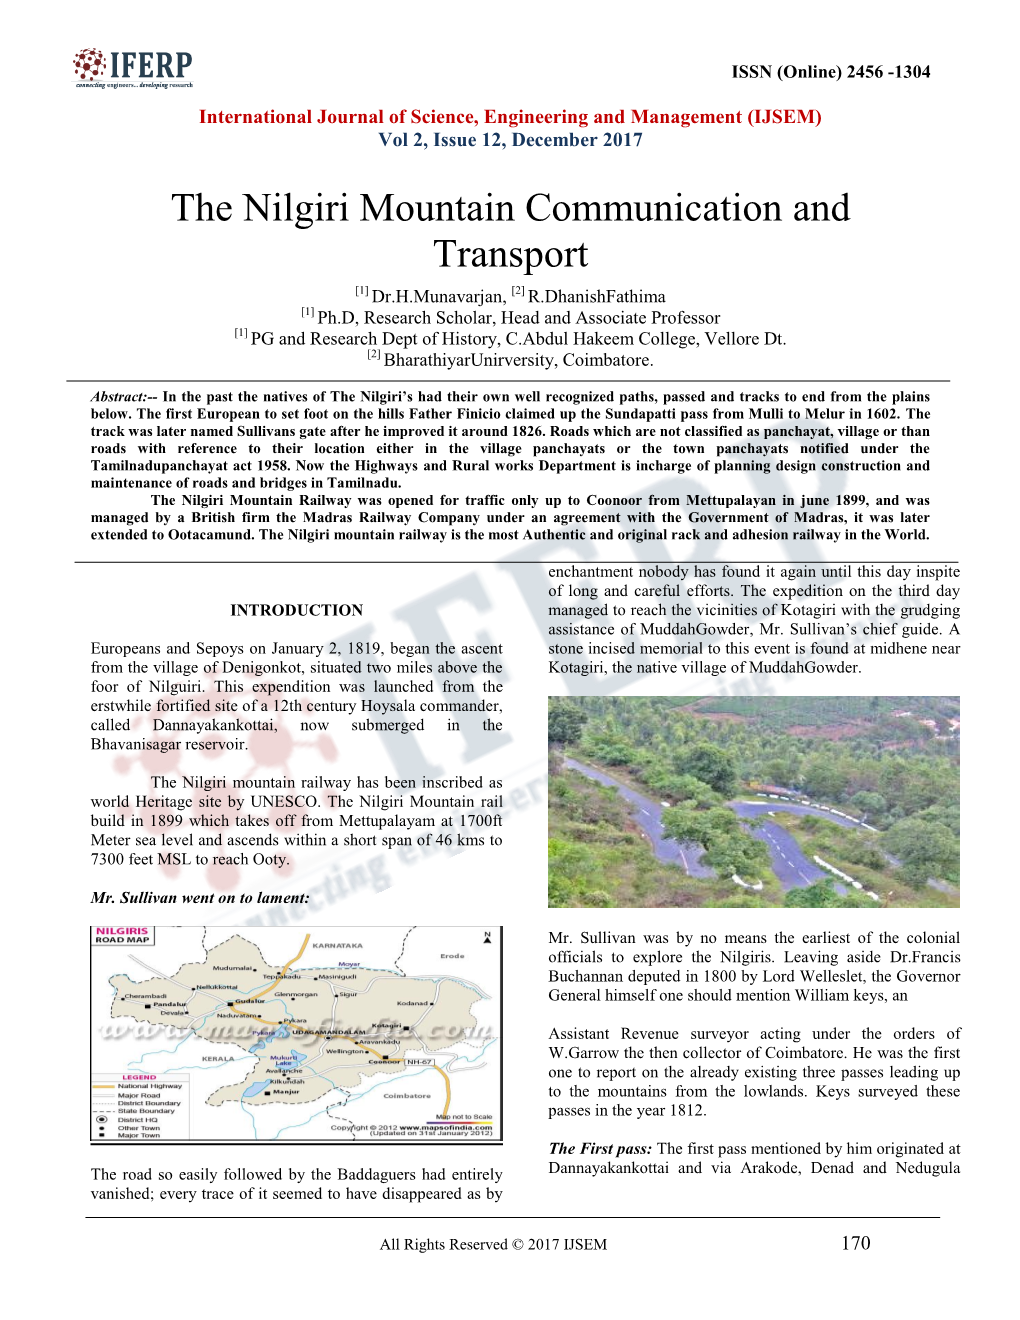 The Nilgiri Mountain Communication and Transport